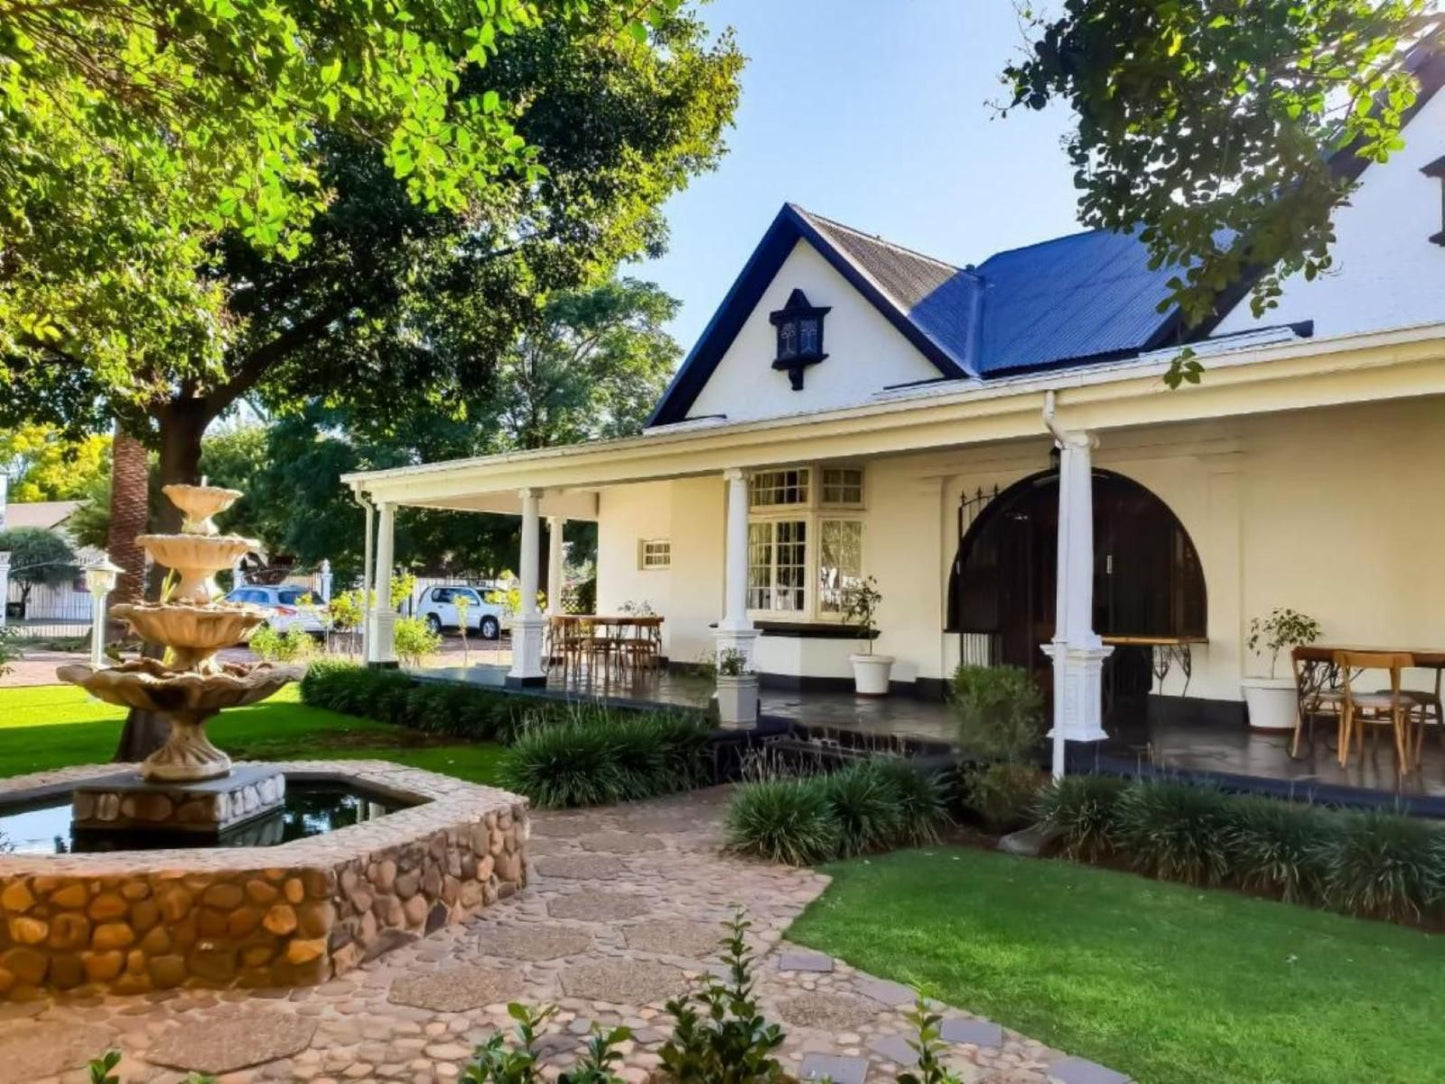 Bauhenia Guesthouse Potchefstroom North West Province South Africa House, Building, Architecture, Pavilion